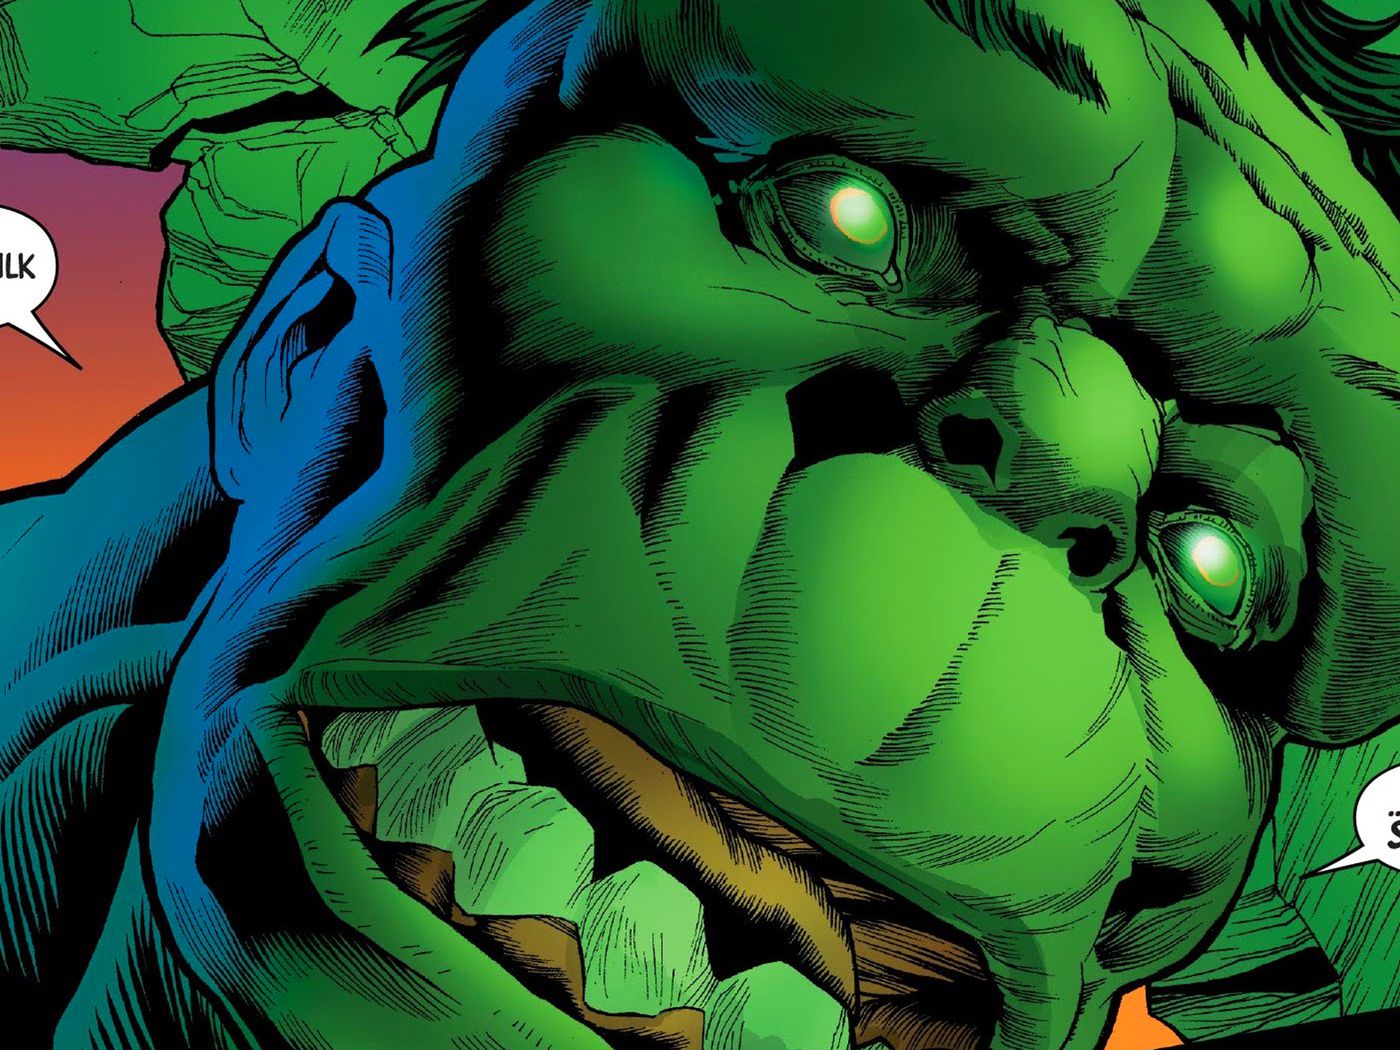 Sad Hulk Marvel Comic Wallpapers